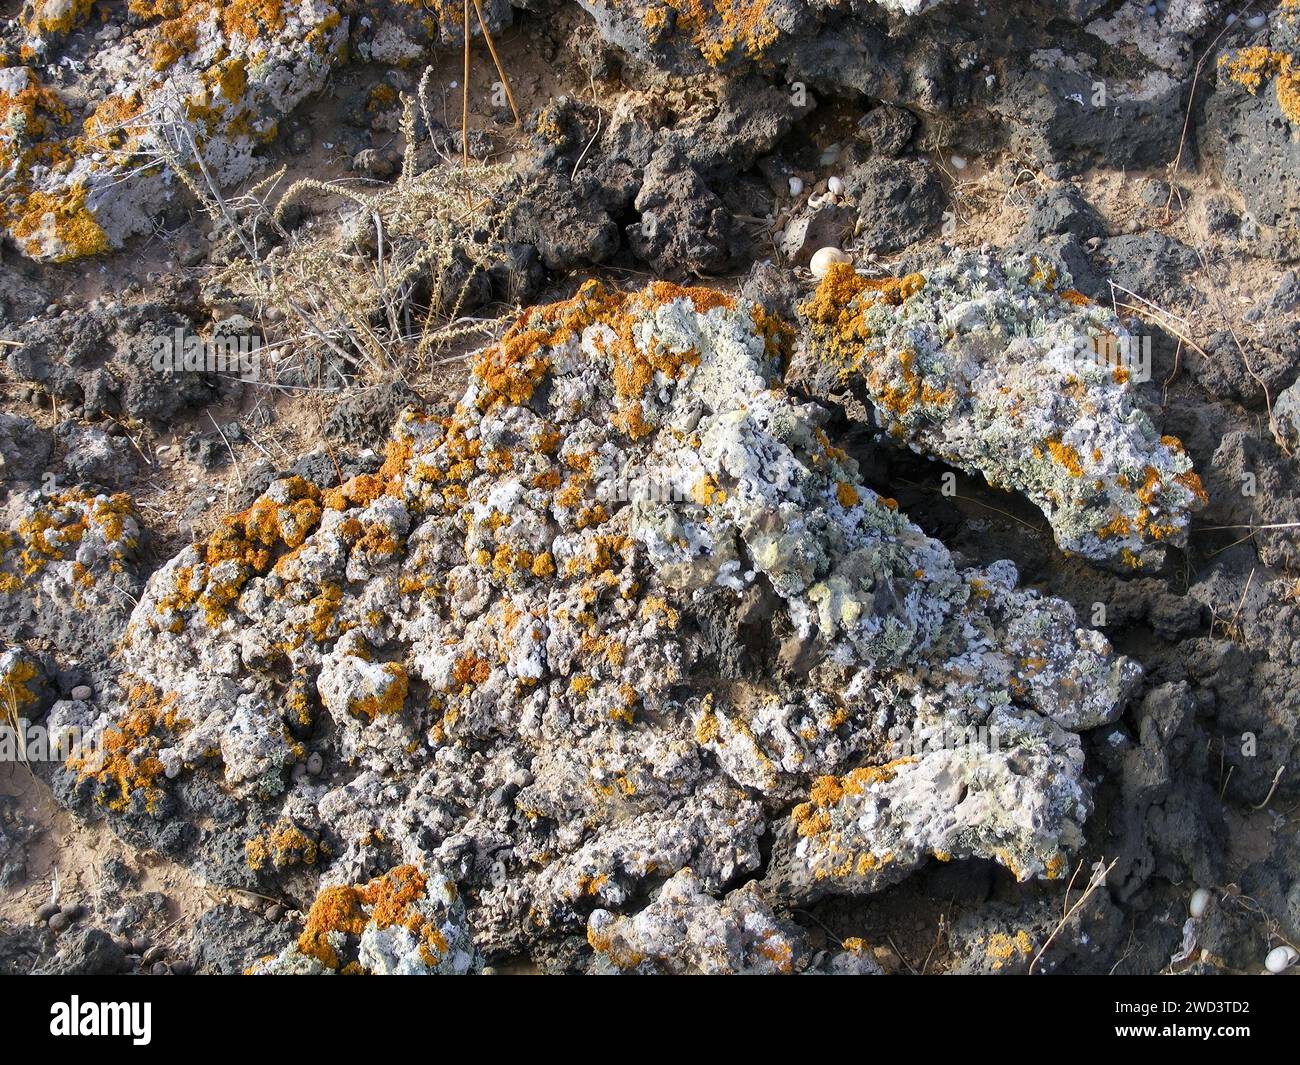 Pioneer organisms - lichens growing on volcanic rocks, Canary Islands, Fuerteventura. Stock Photo